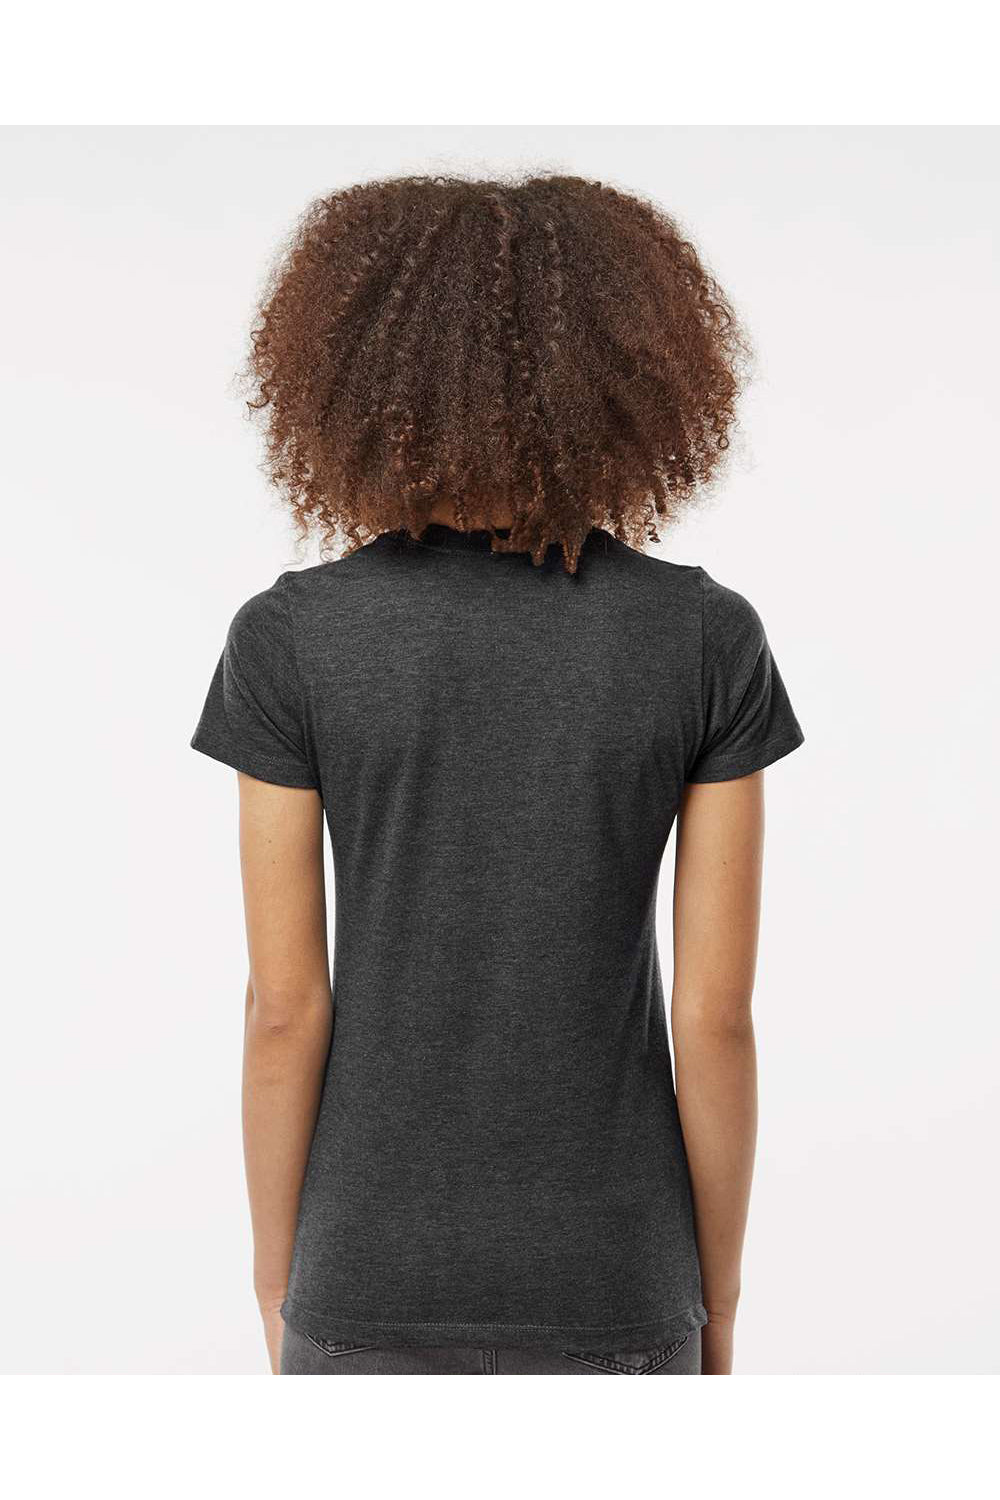 Tultex 542 Womens Premium Short Sleeve Crewneck T-Shirt Heather Black Model Back